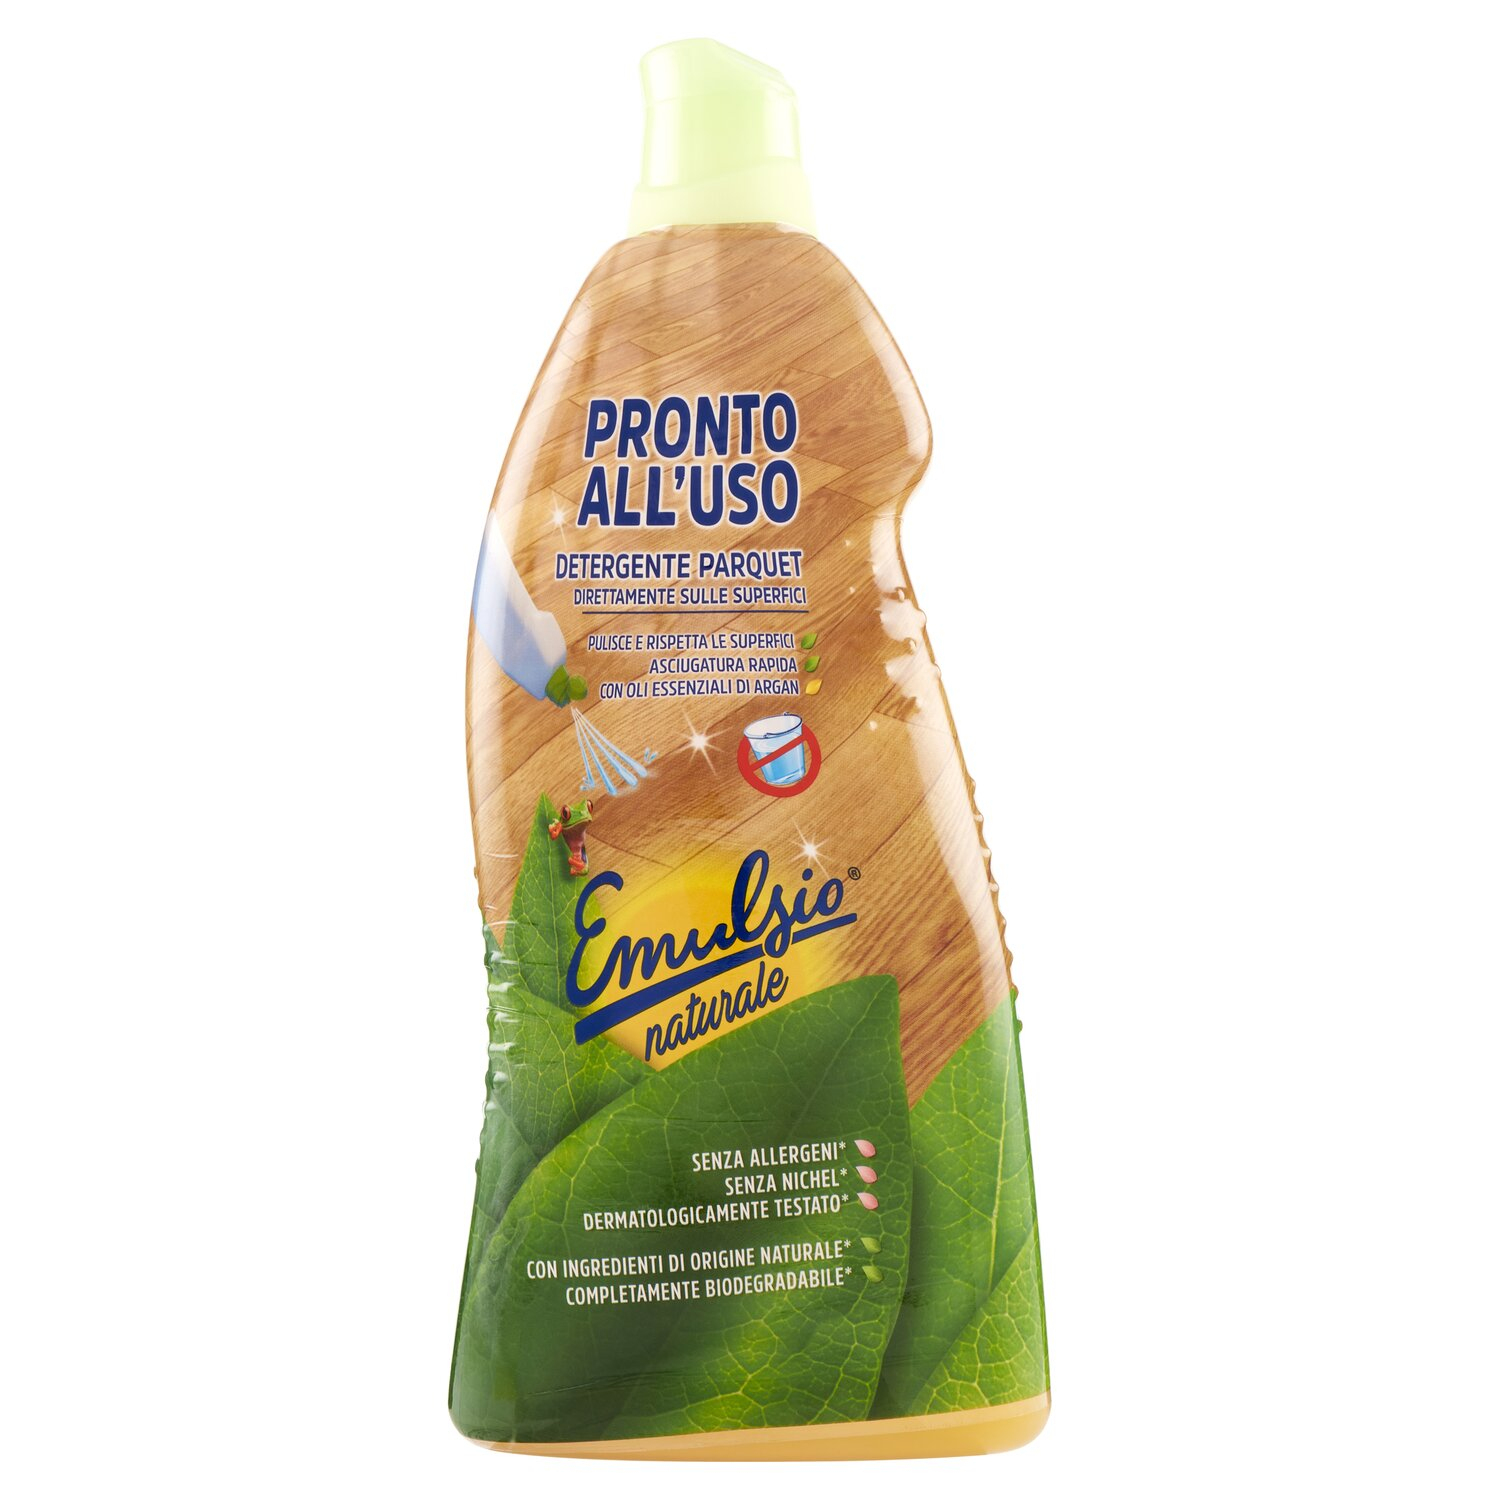 Emulsio Naturale Pronto All'uso Detergente Parquet 1000 Ml avec Parquet Pronto